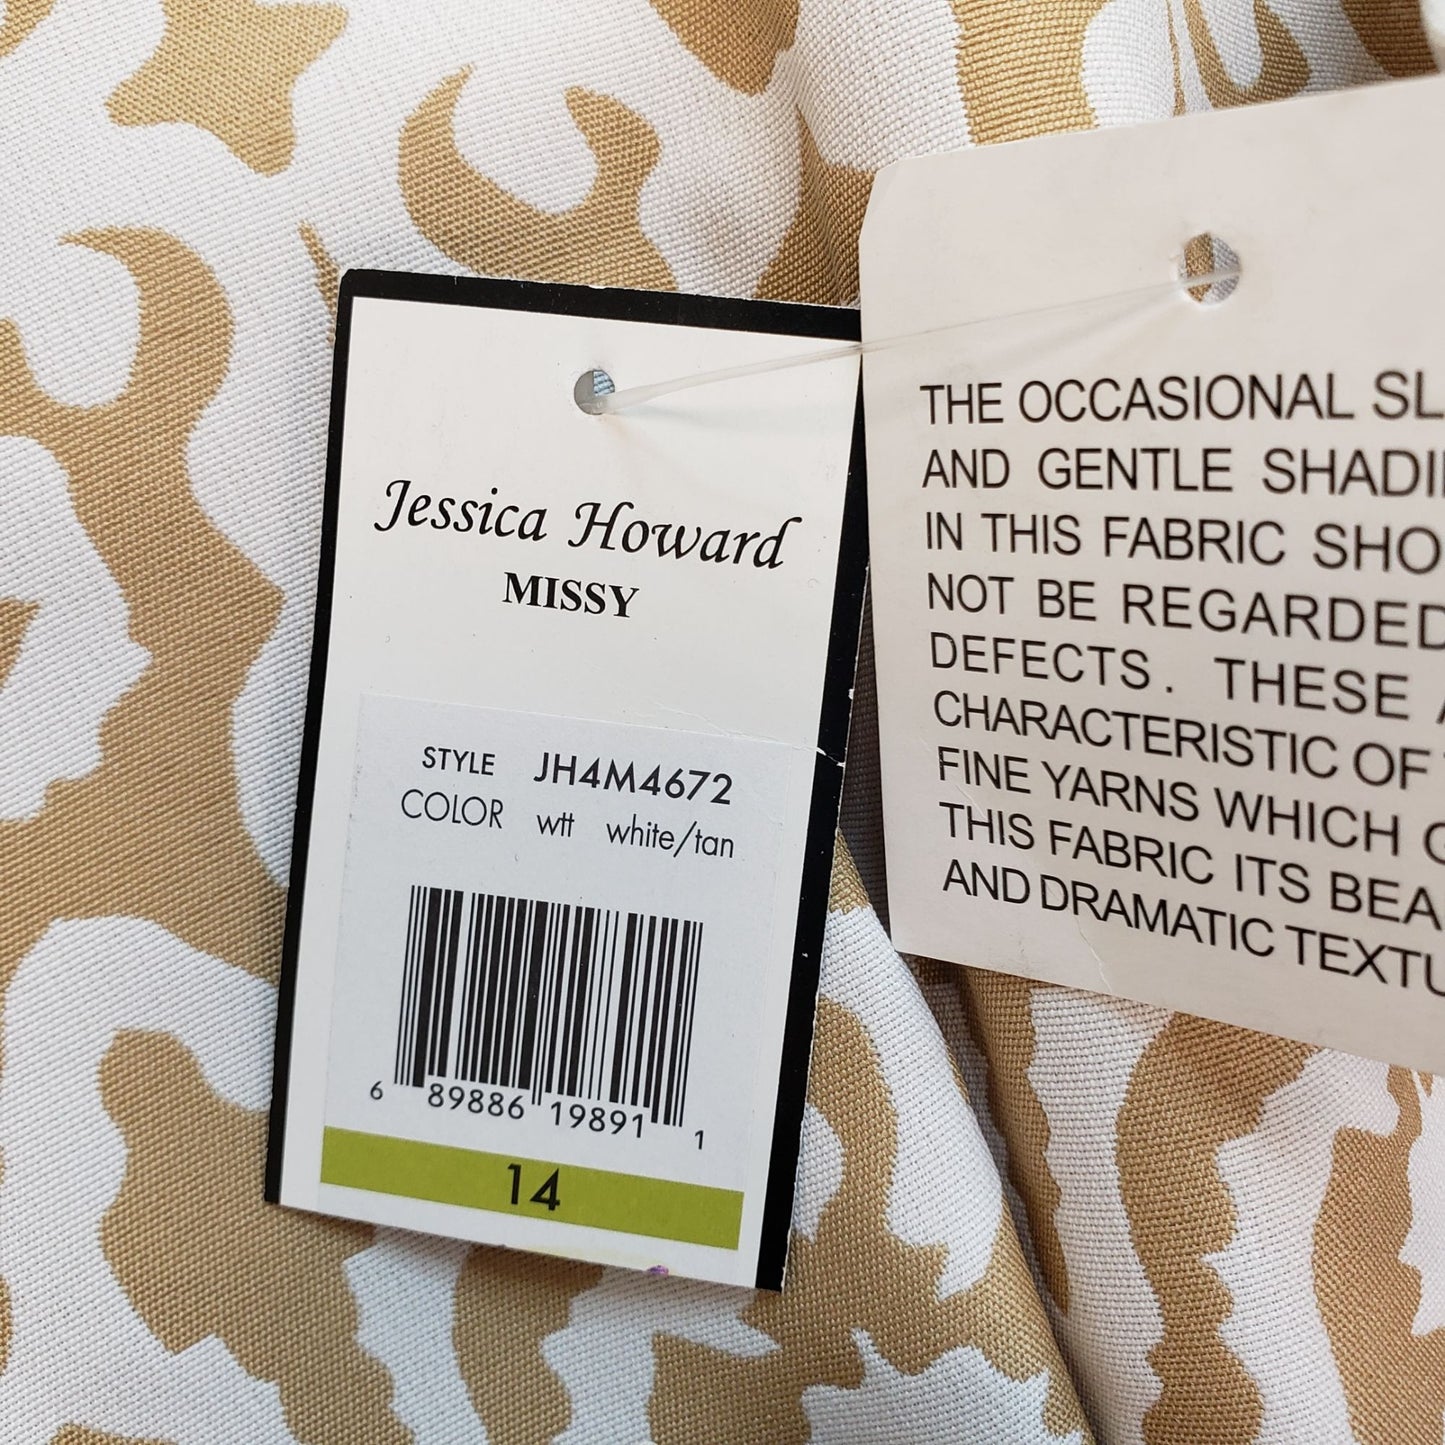 NWT Jessica Howard Mixed Print Sheath Dress Size 14